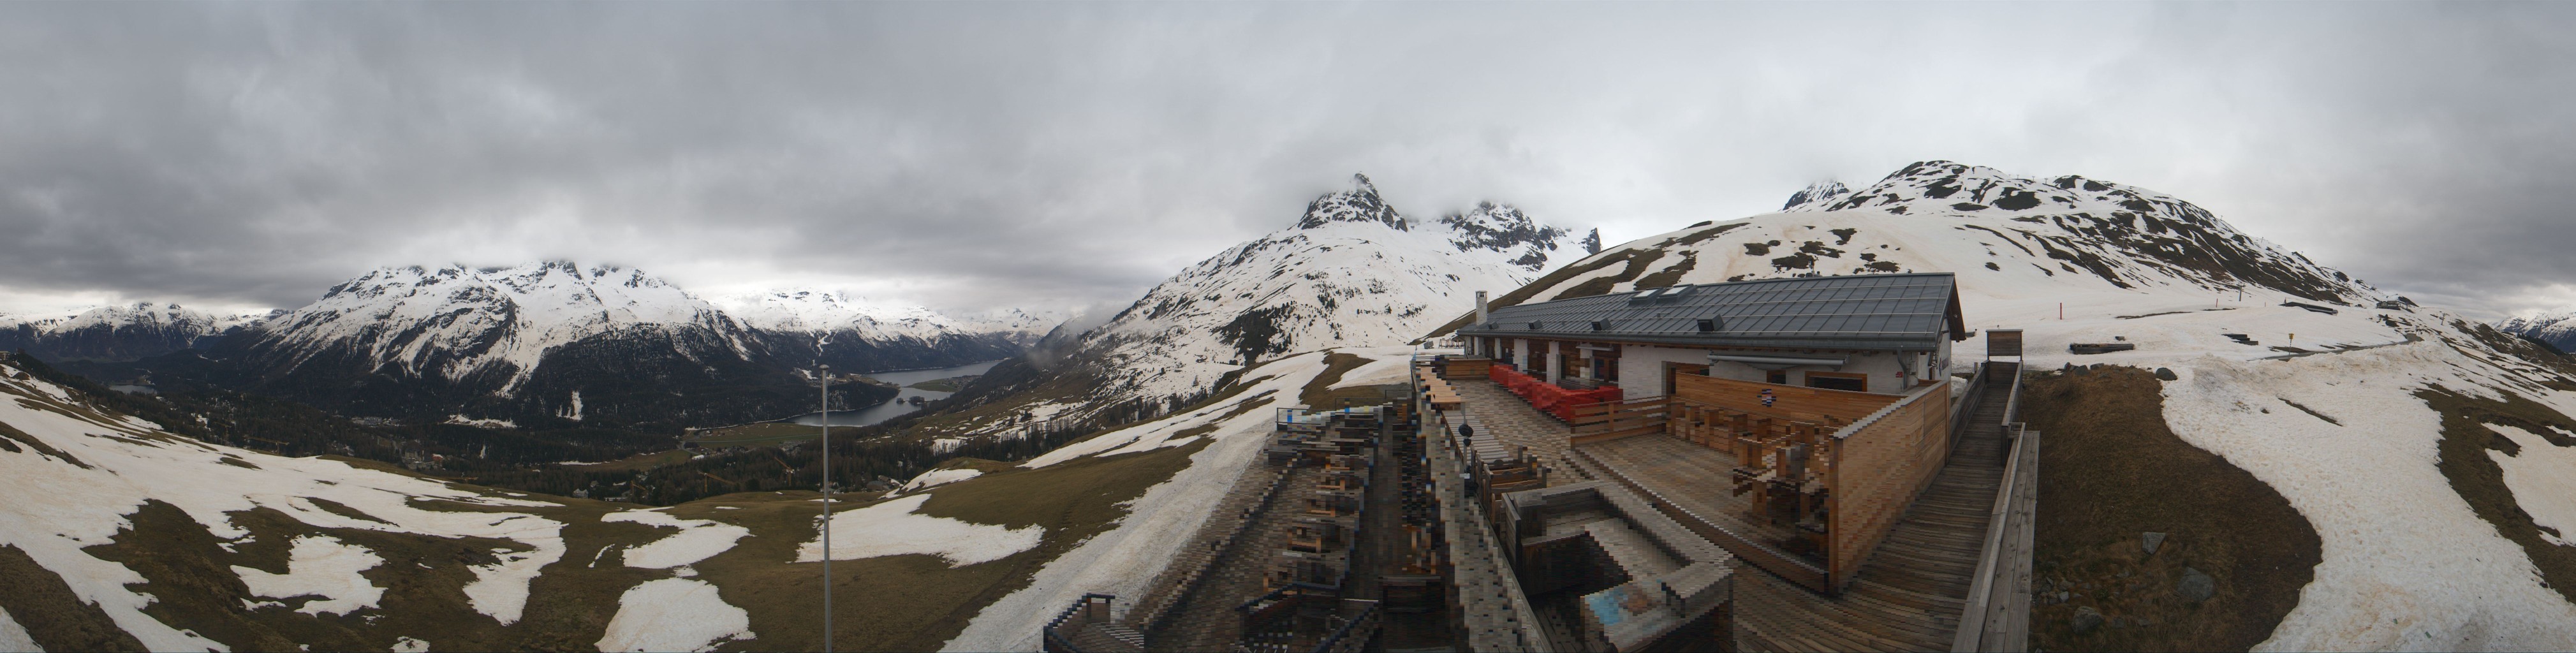 St. Moritz - Panoramacam El Paradiso